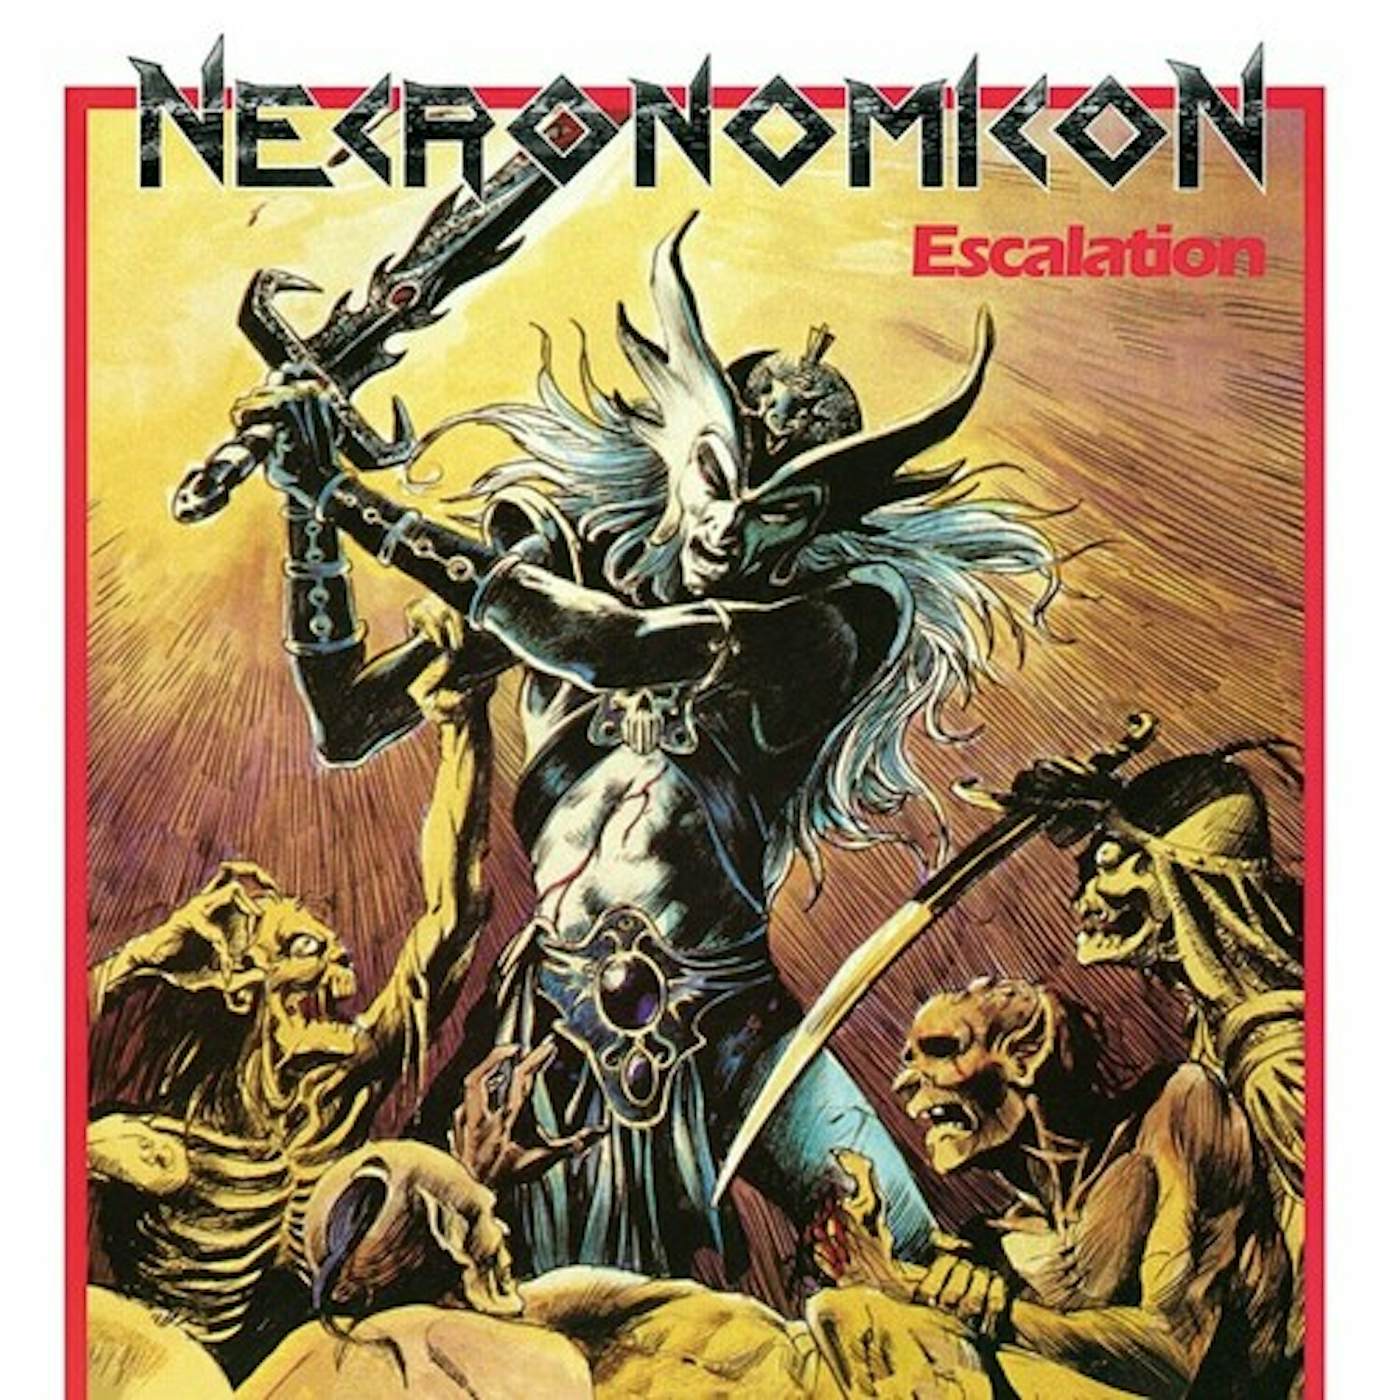 Necronomicon ESCALATION - MULTI SPLATTER Vinyl Record